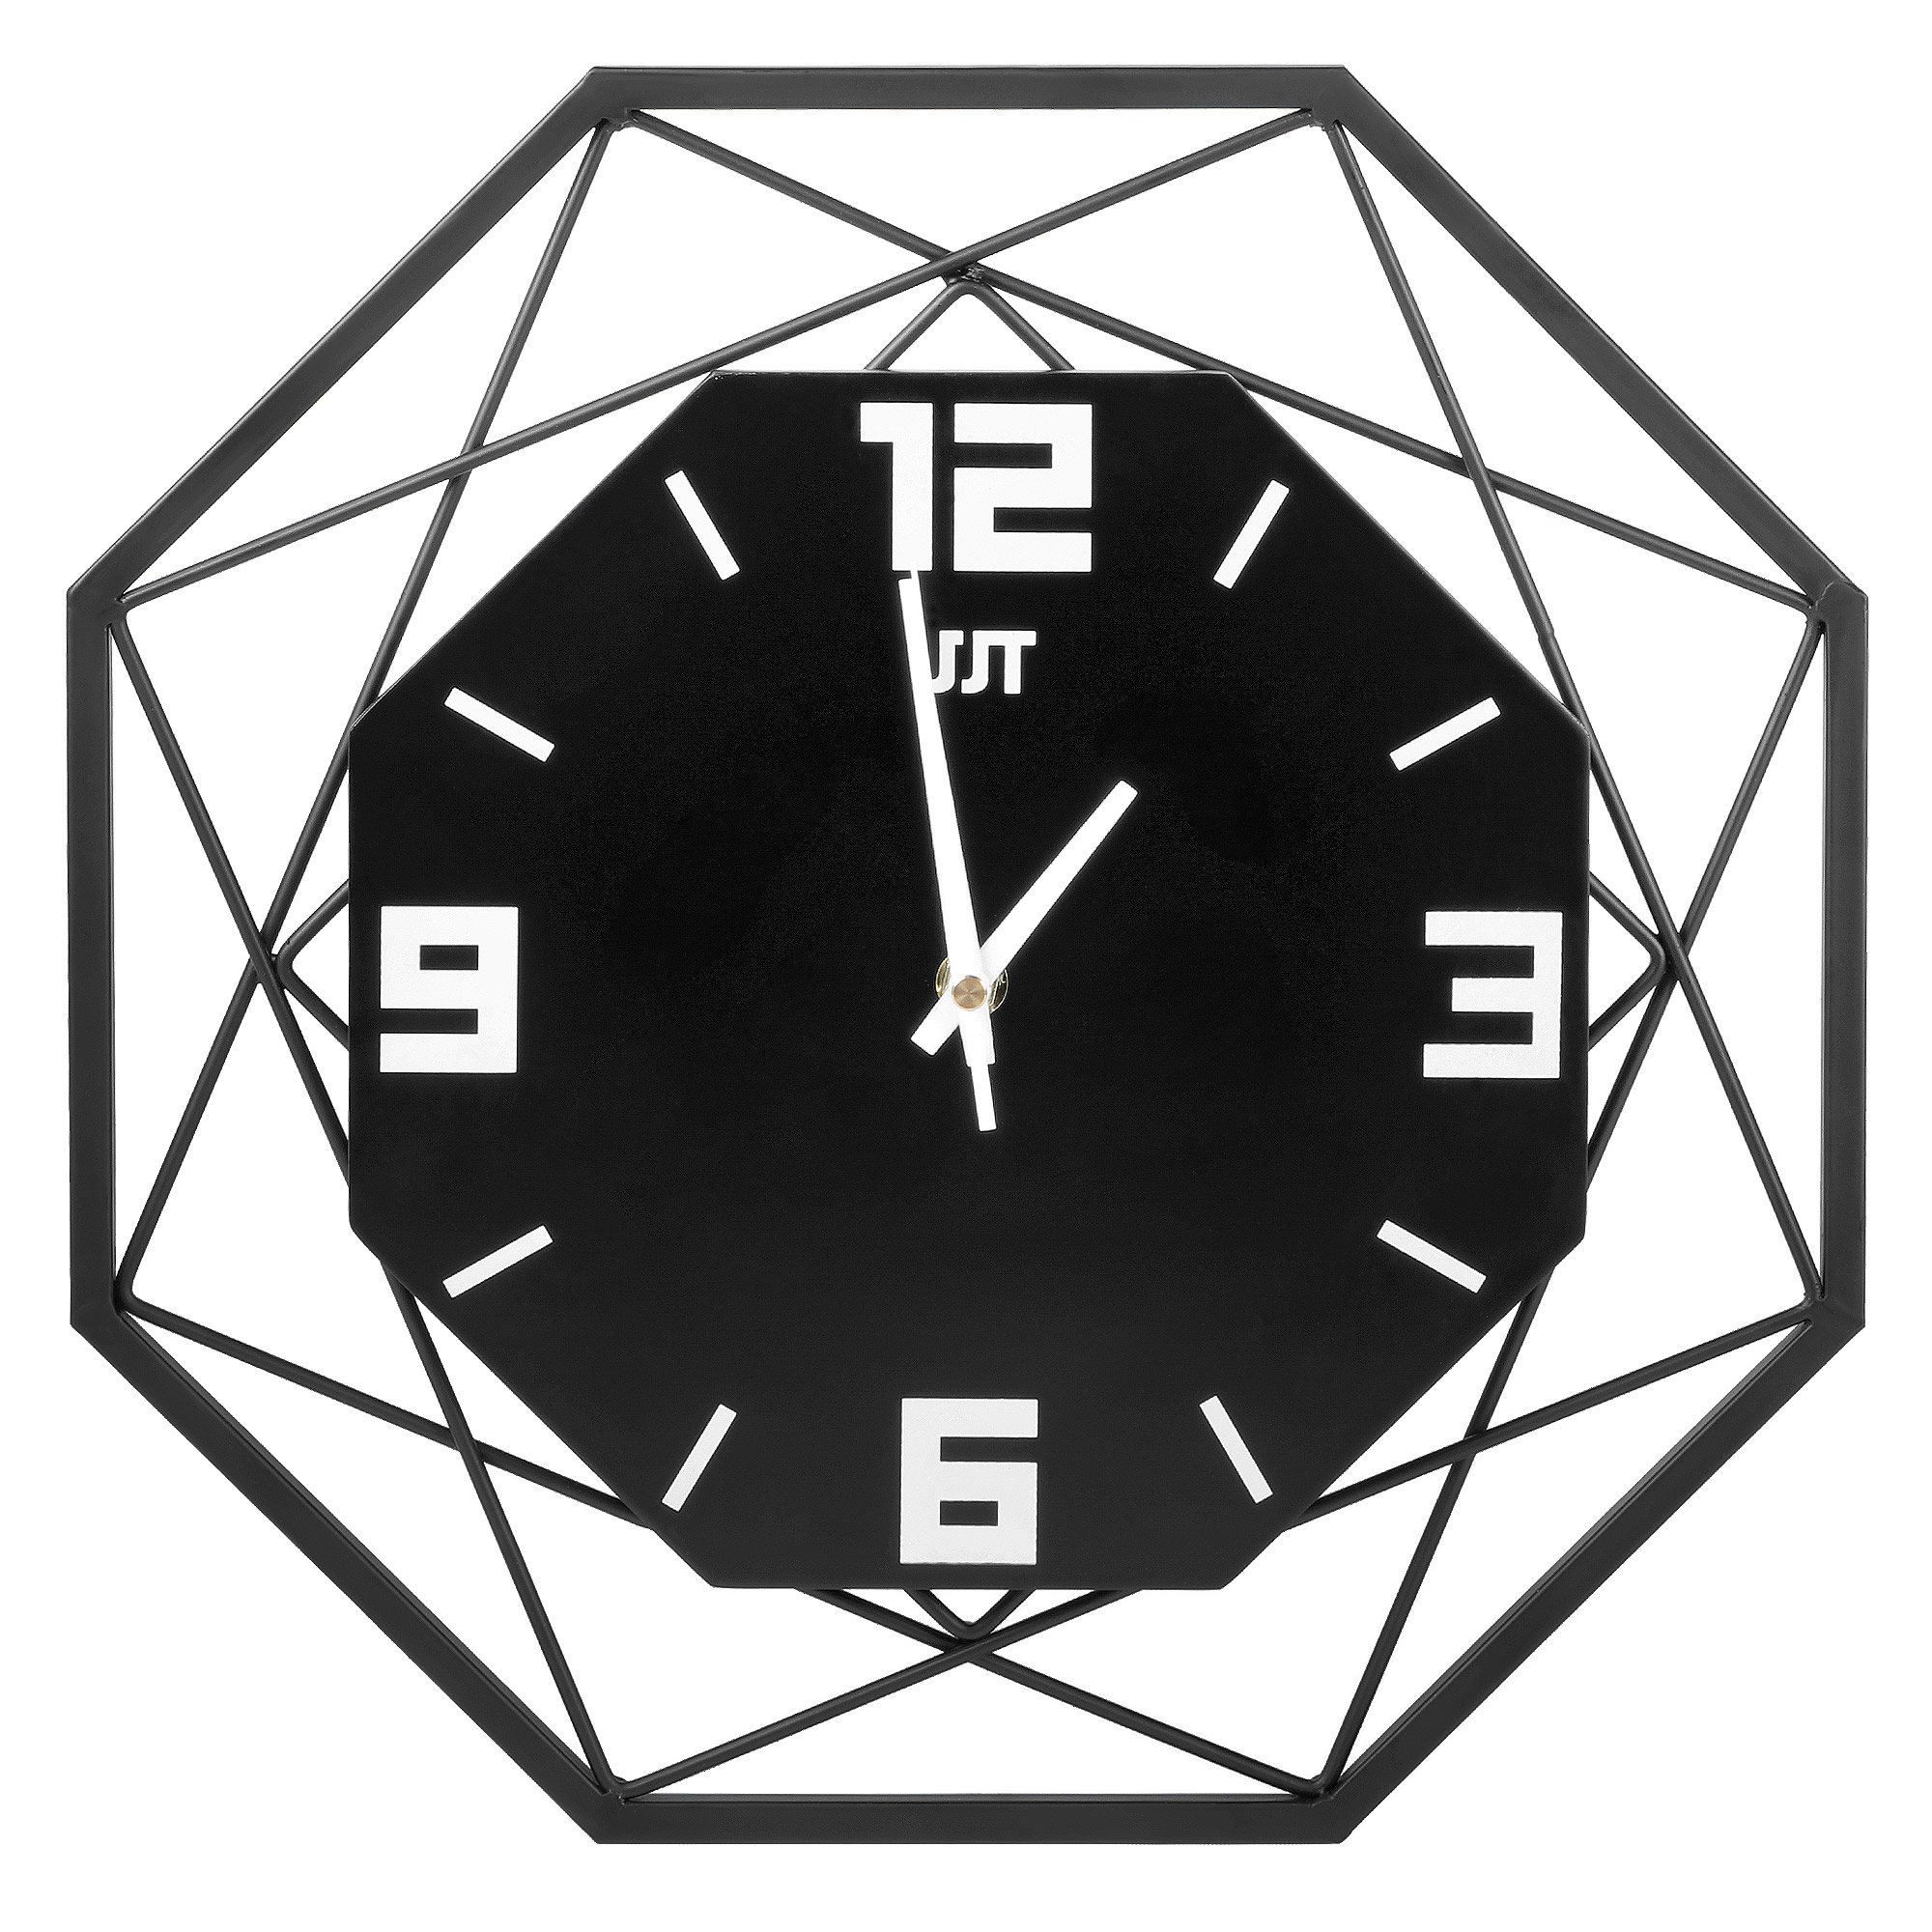 Часы настенные JJT Геометрия 35 x 35 см